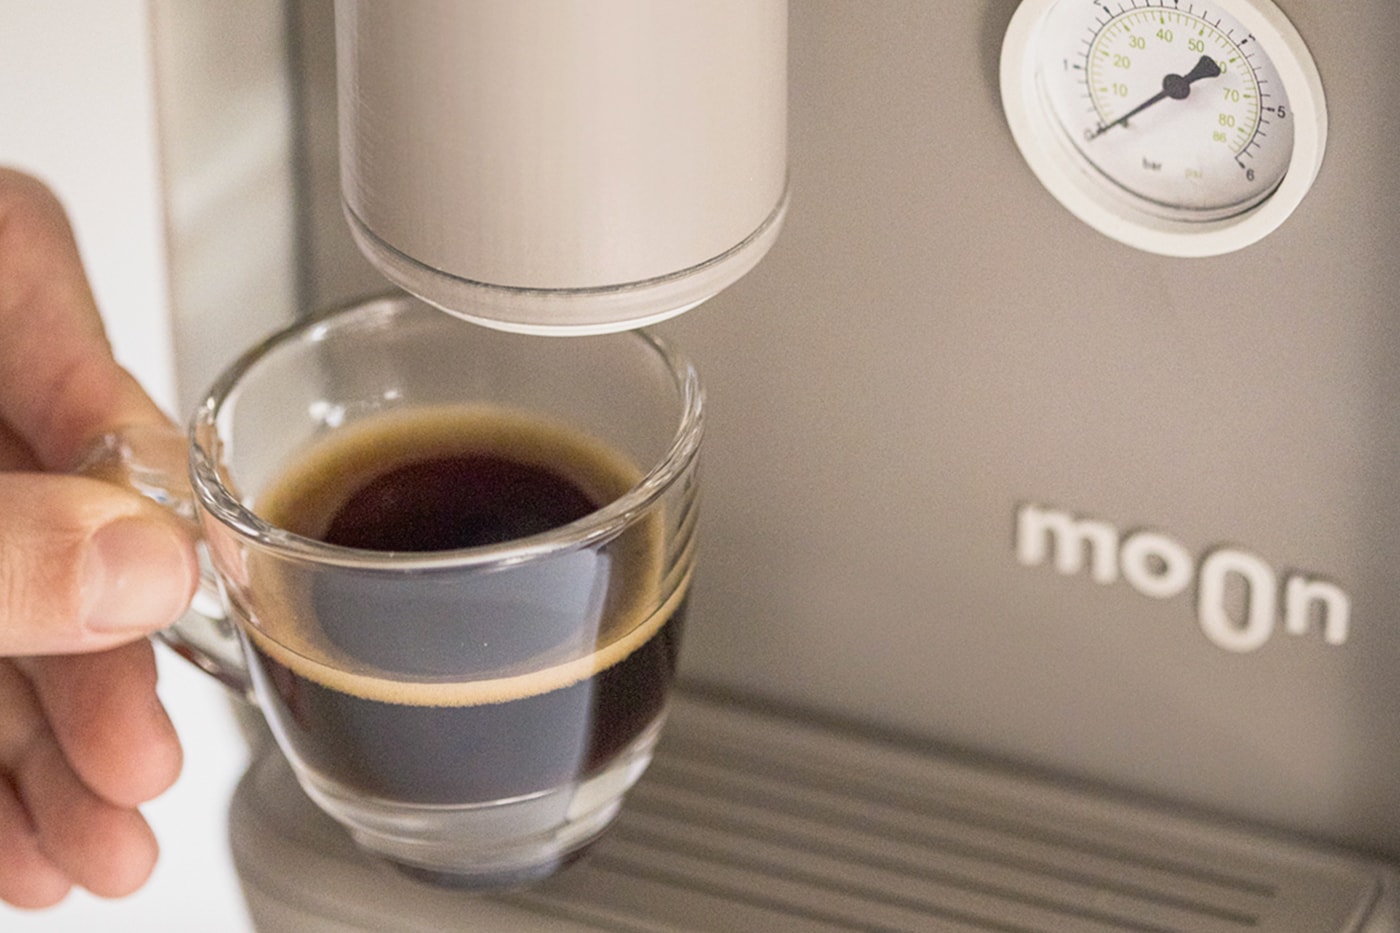 moon coffee maker machine minimalist roee ben yehuda espresso home design appliances